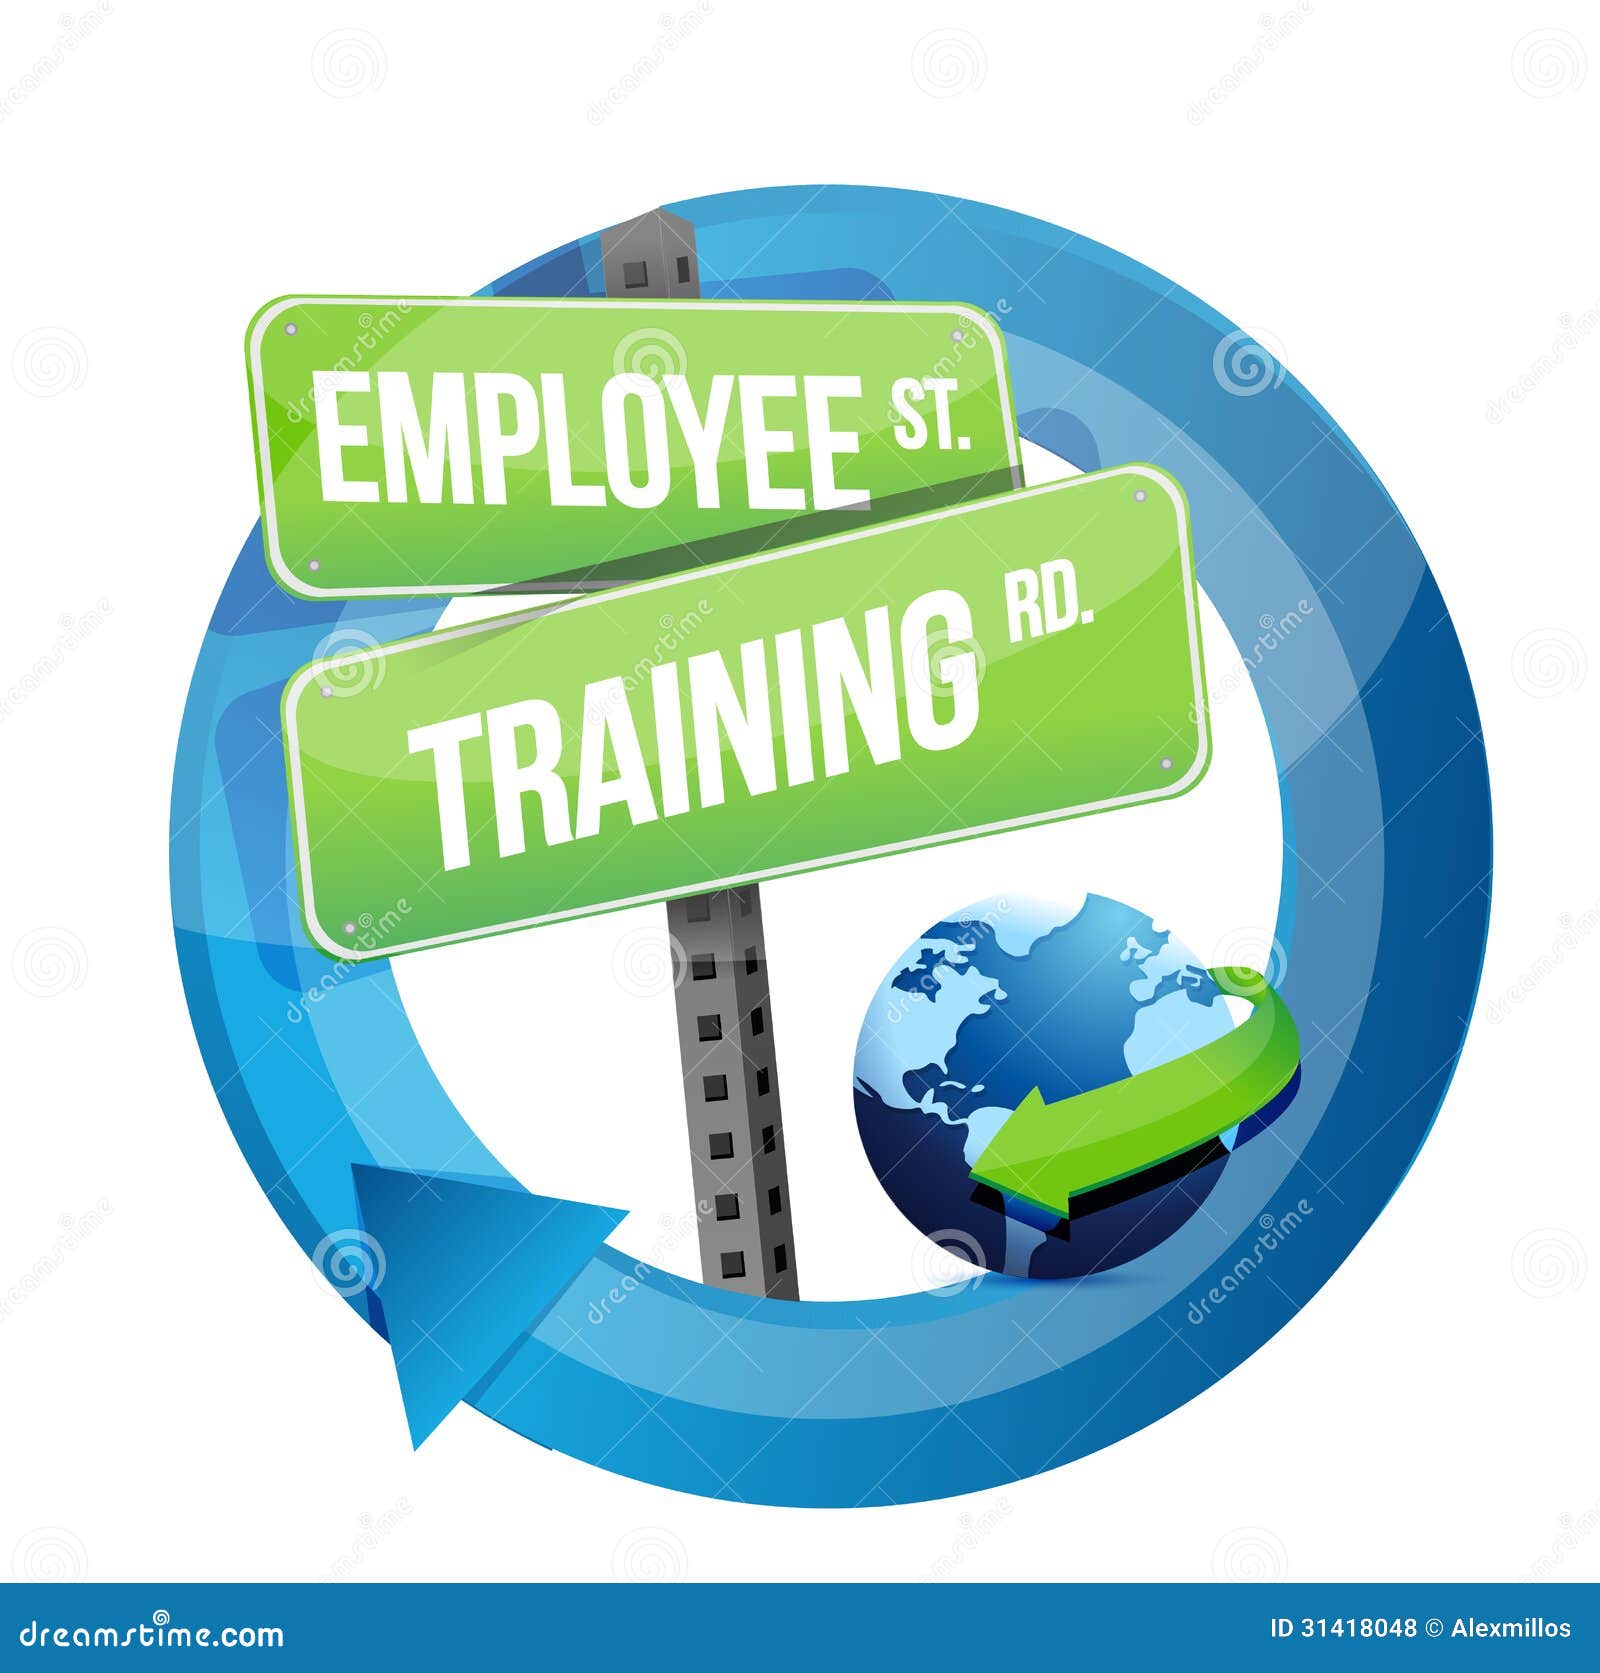 employee training clipart - photo #5